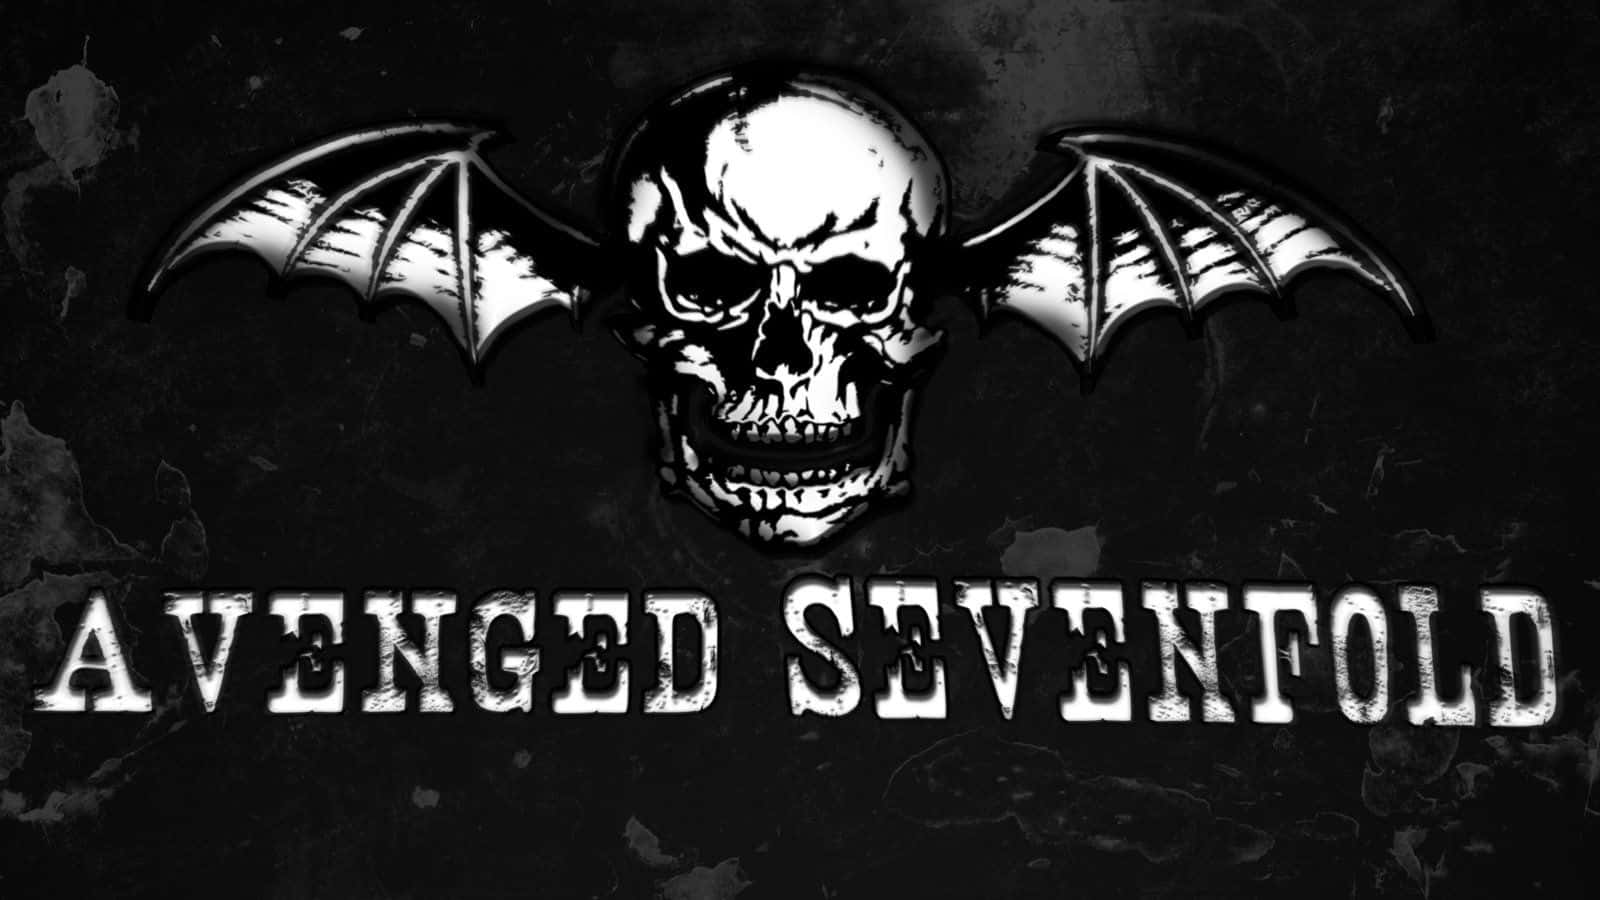 Avengedsevenfold Logo De La Calavera Fondo de pantalla